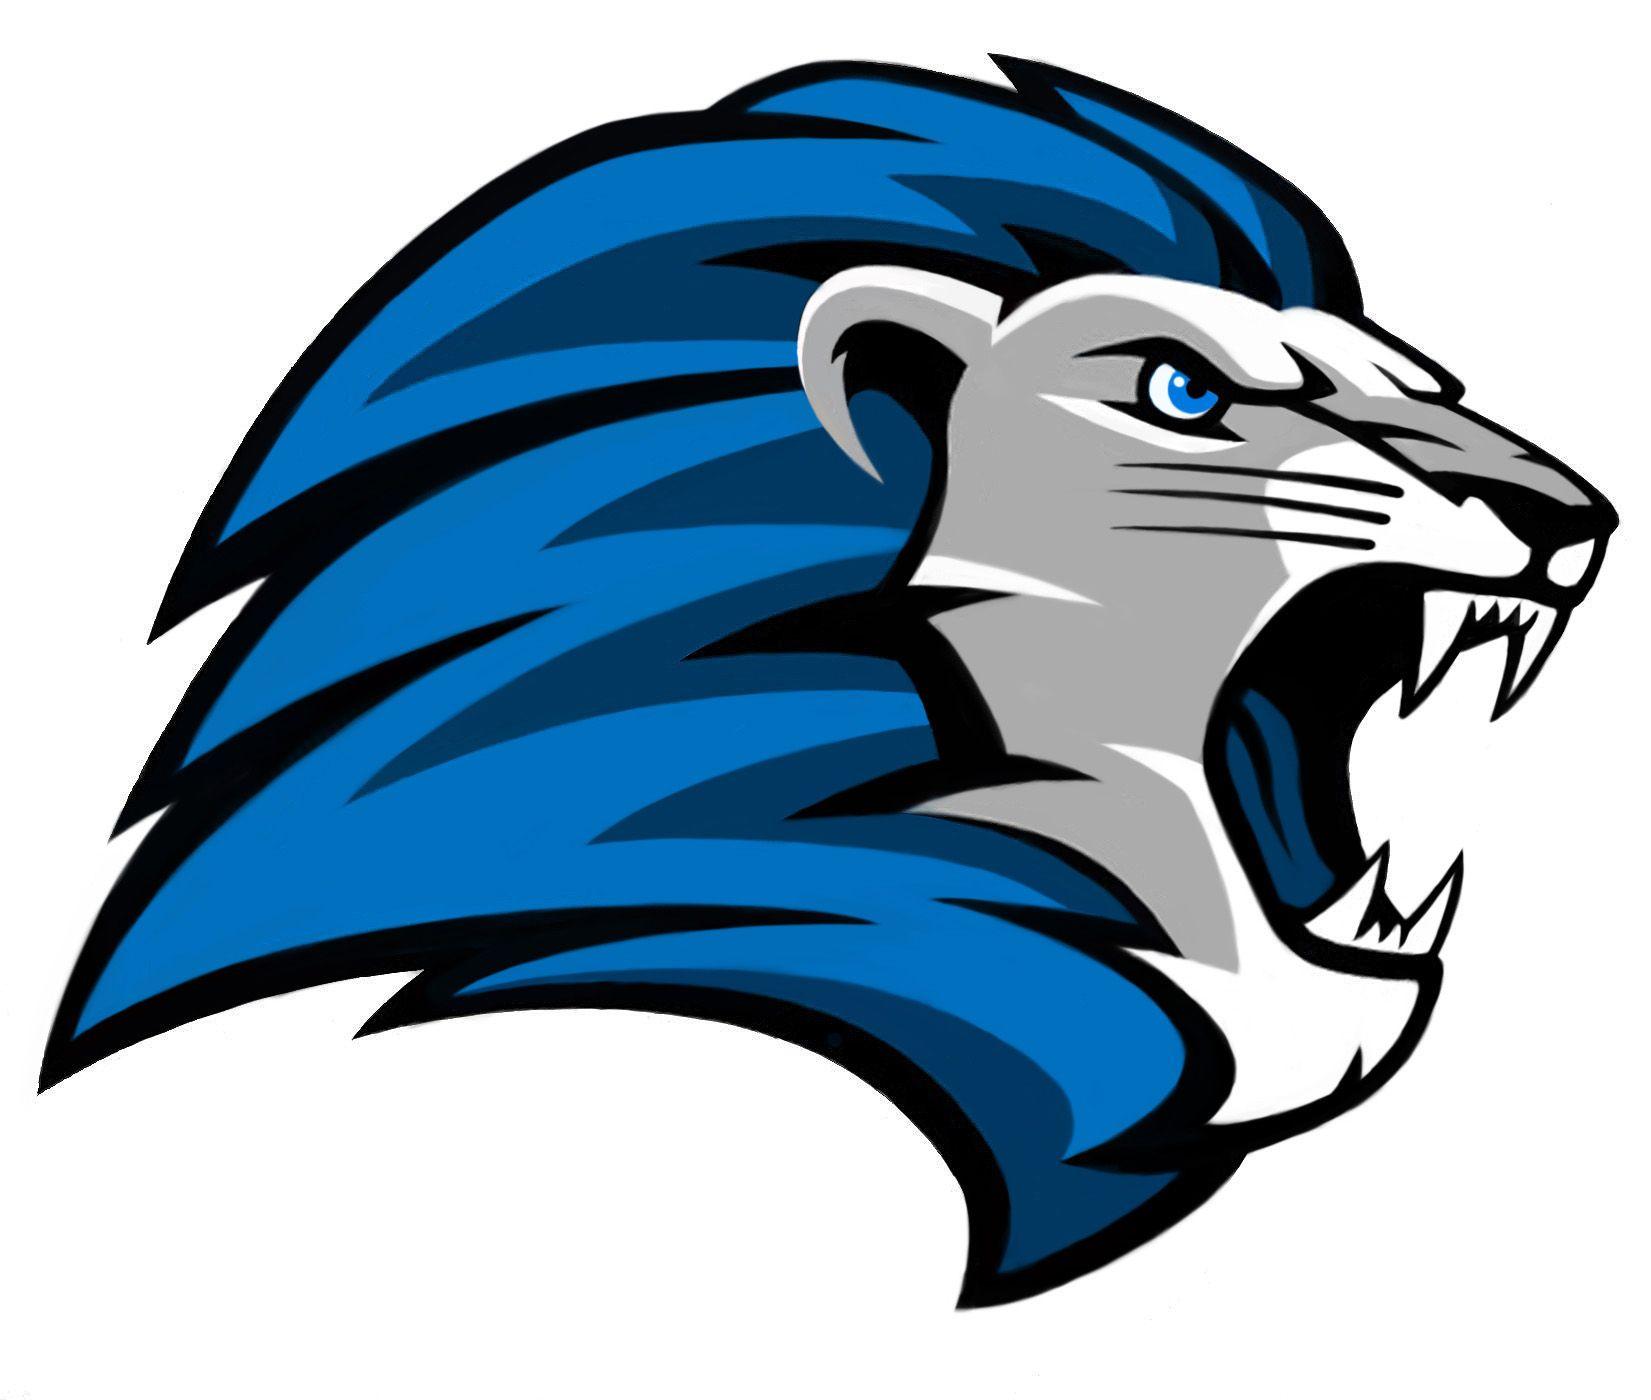 Blue Lion Sports Logo - New Detroit Lion Logo - Concepts - Chris Creamer's Sports Logos ...